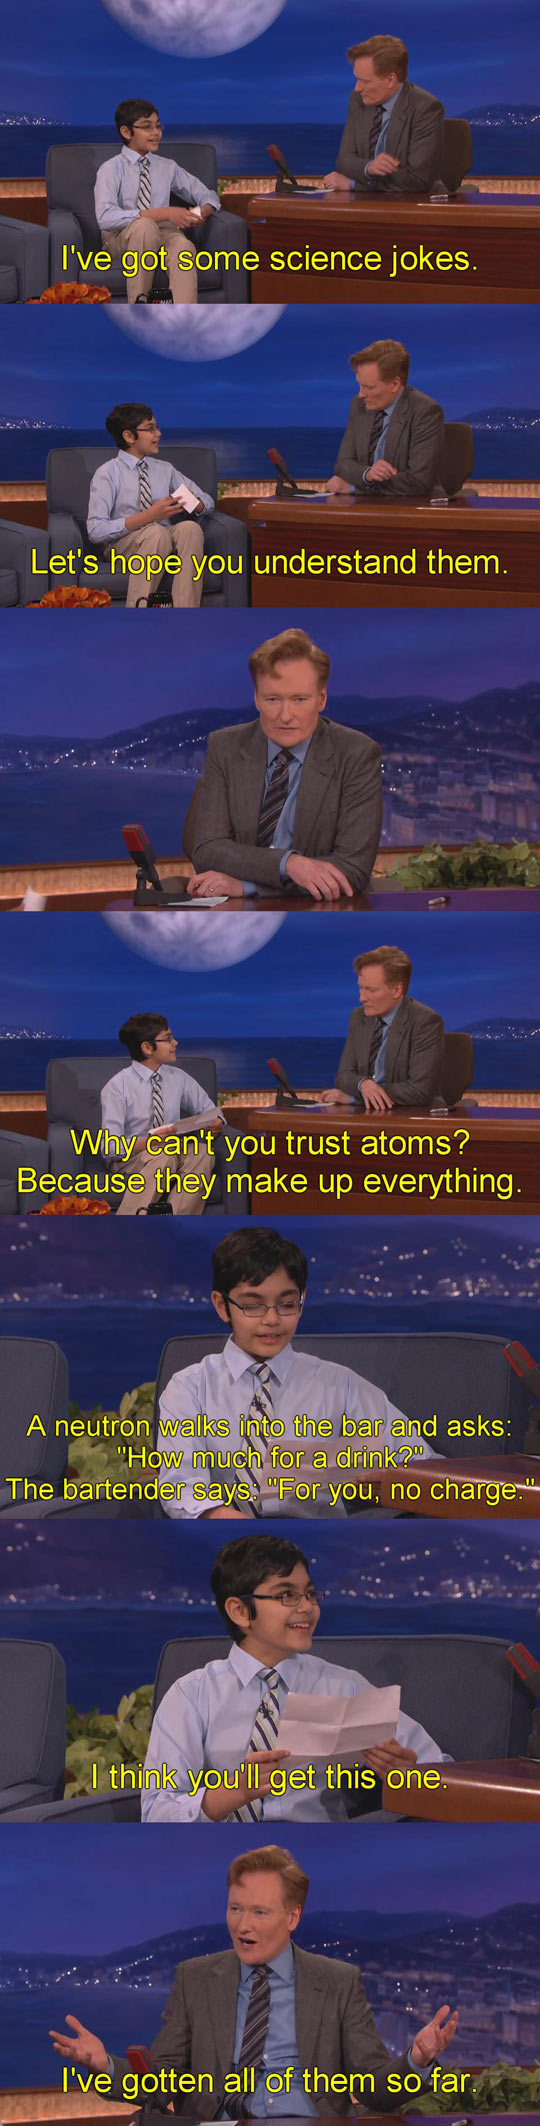 cool-Conan-show-science-jokes